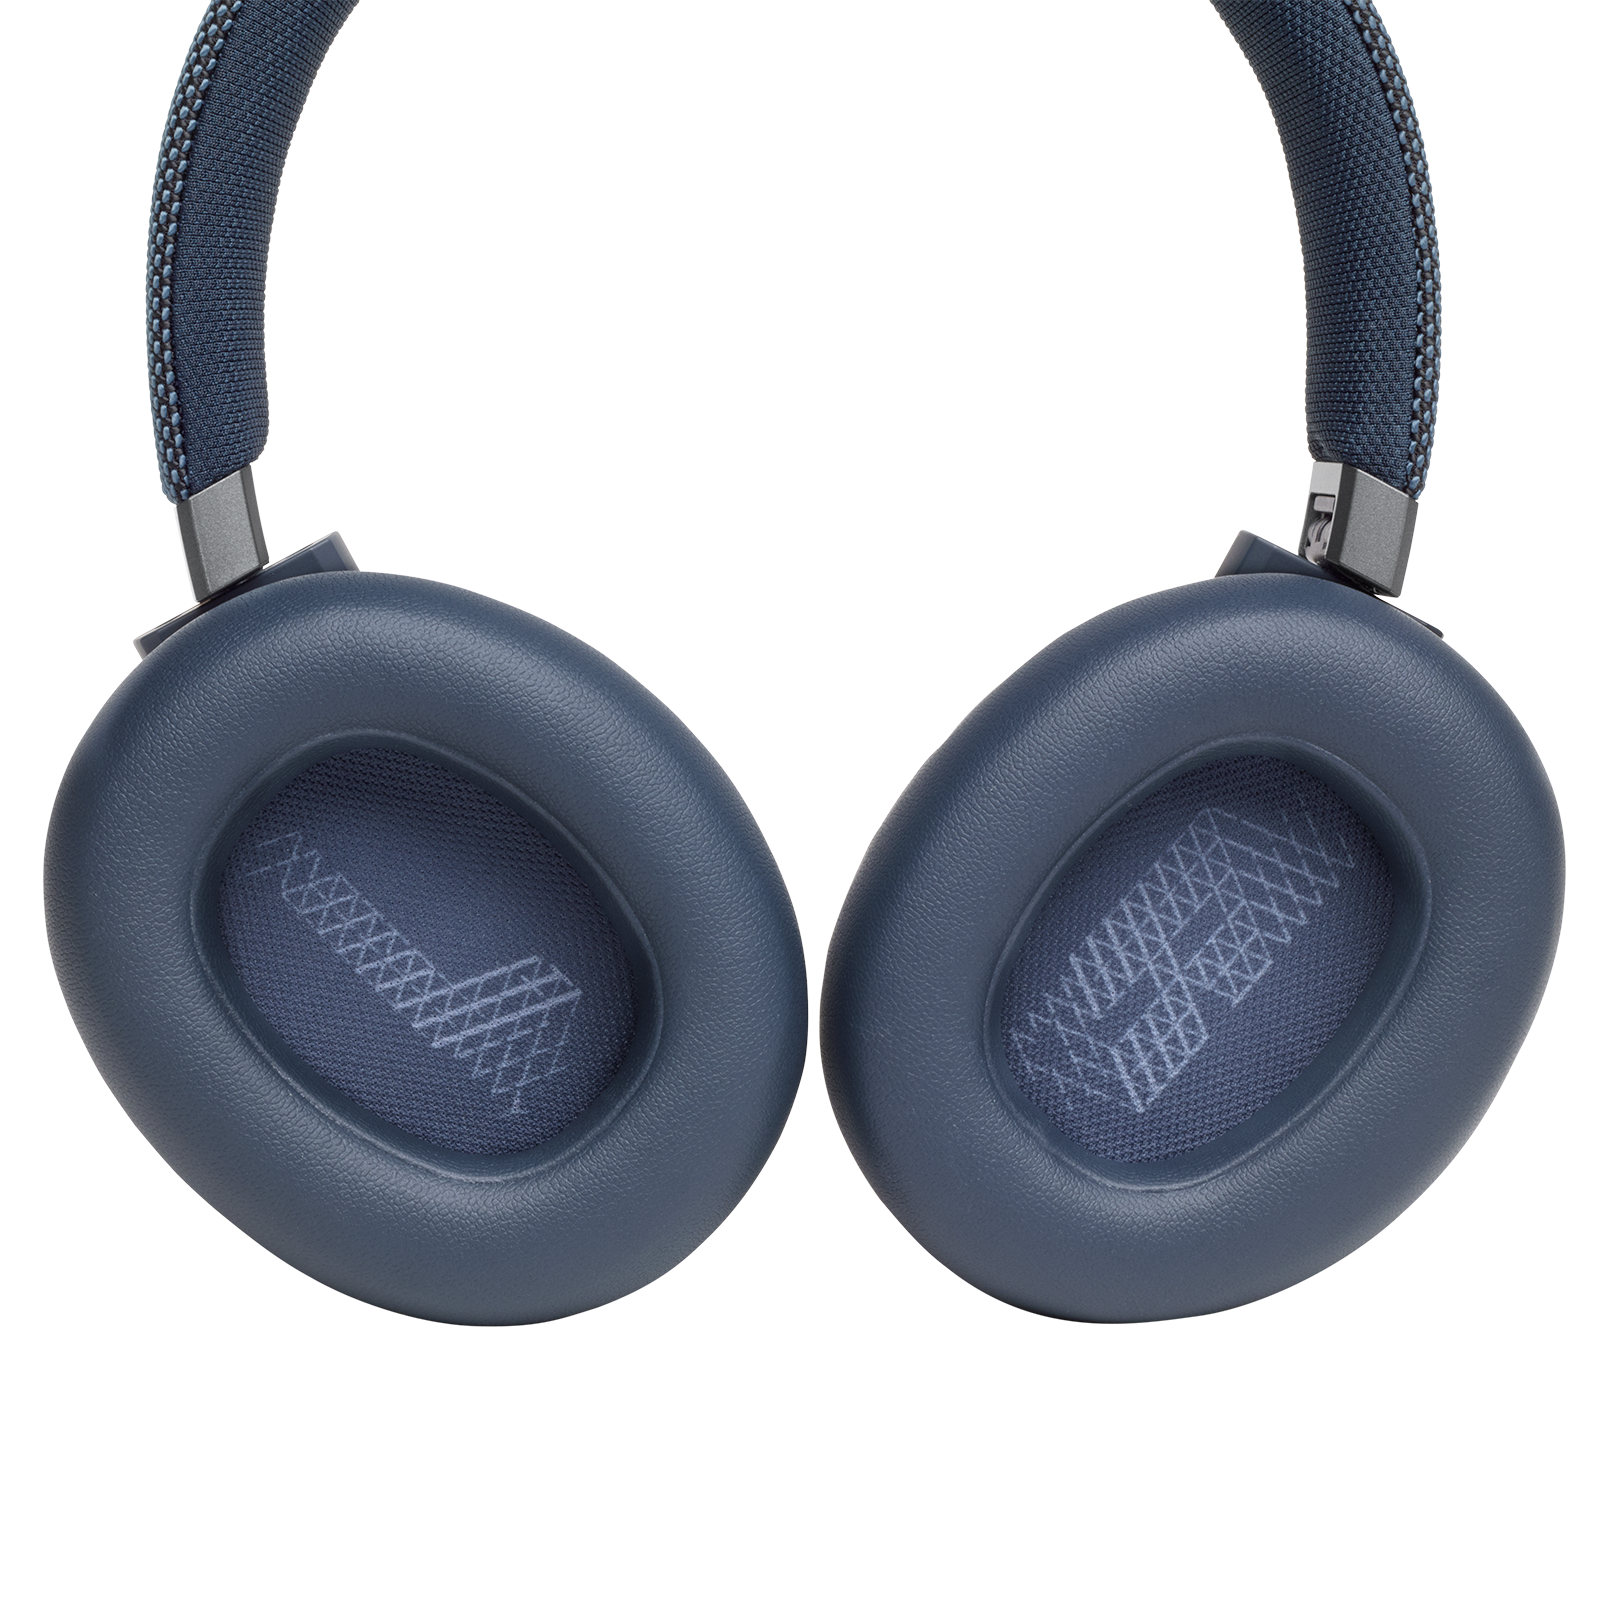 JBL Live 650BTNC - Blue - Wireless Over-Ear Noise-Cancelling Headphones - Detailshot 3